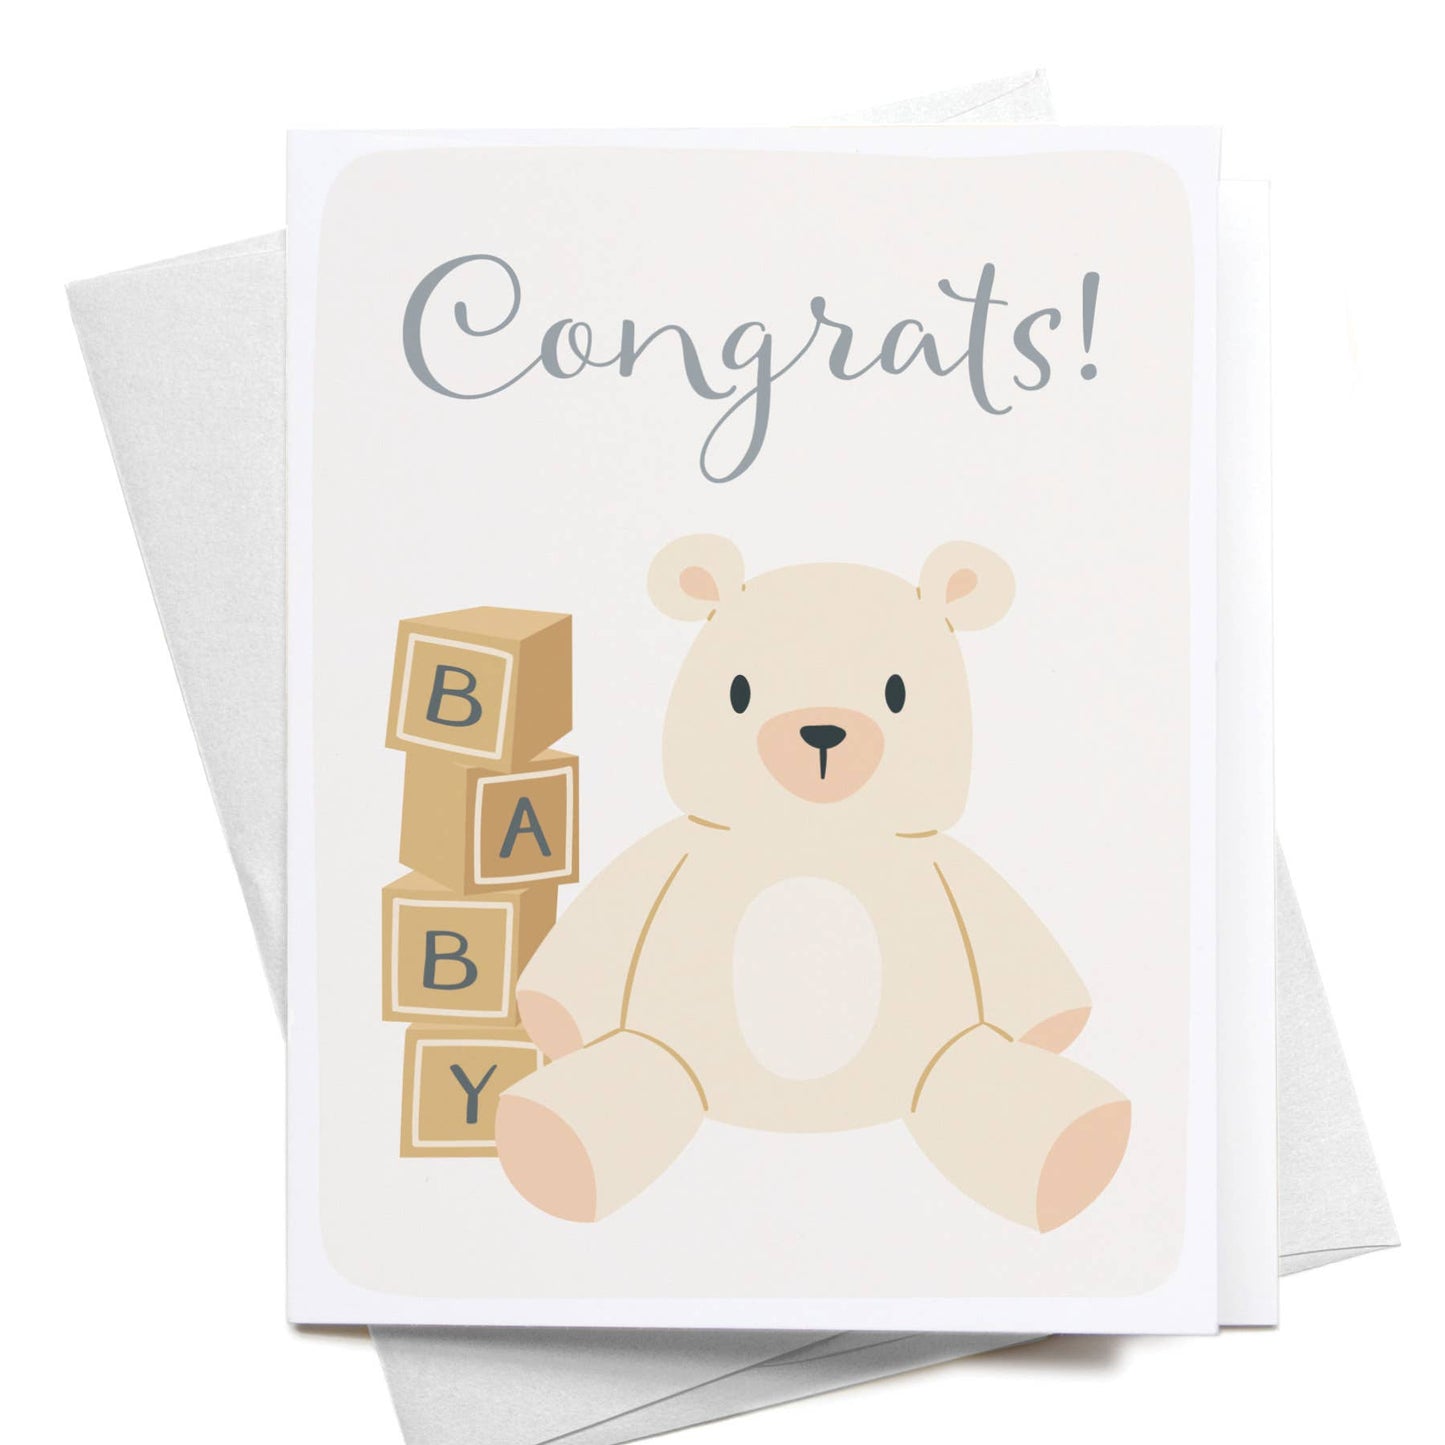 "Congrats!" Teddy Bear Greeting Card